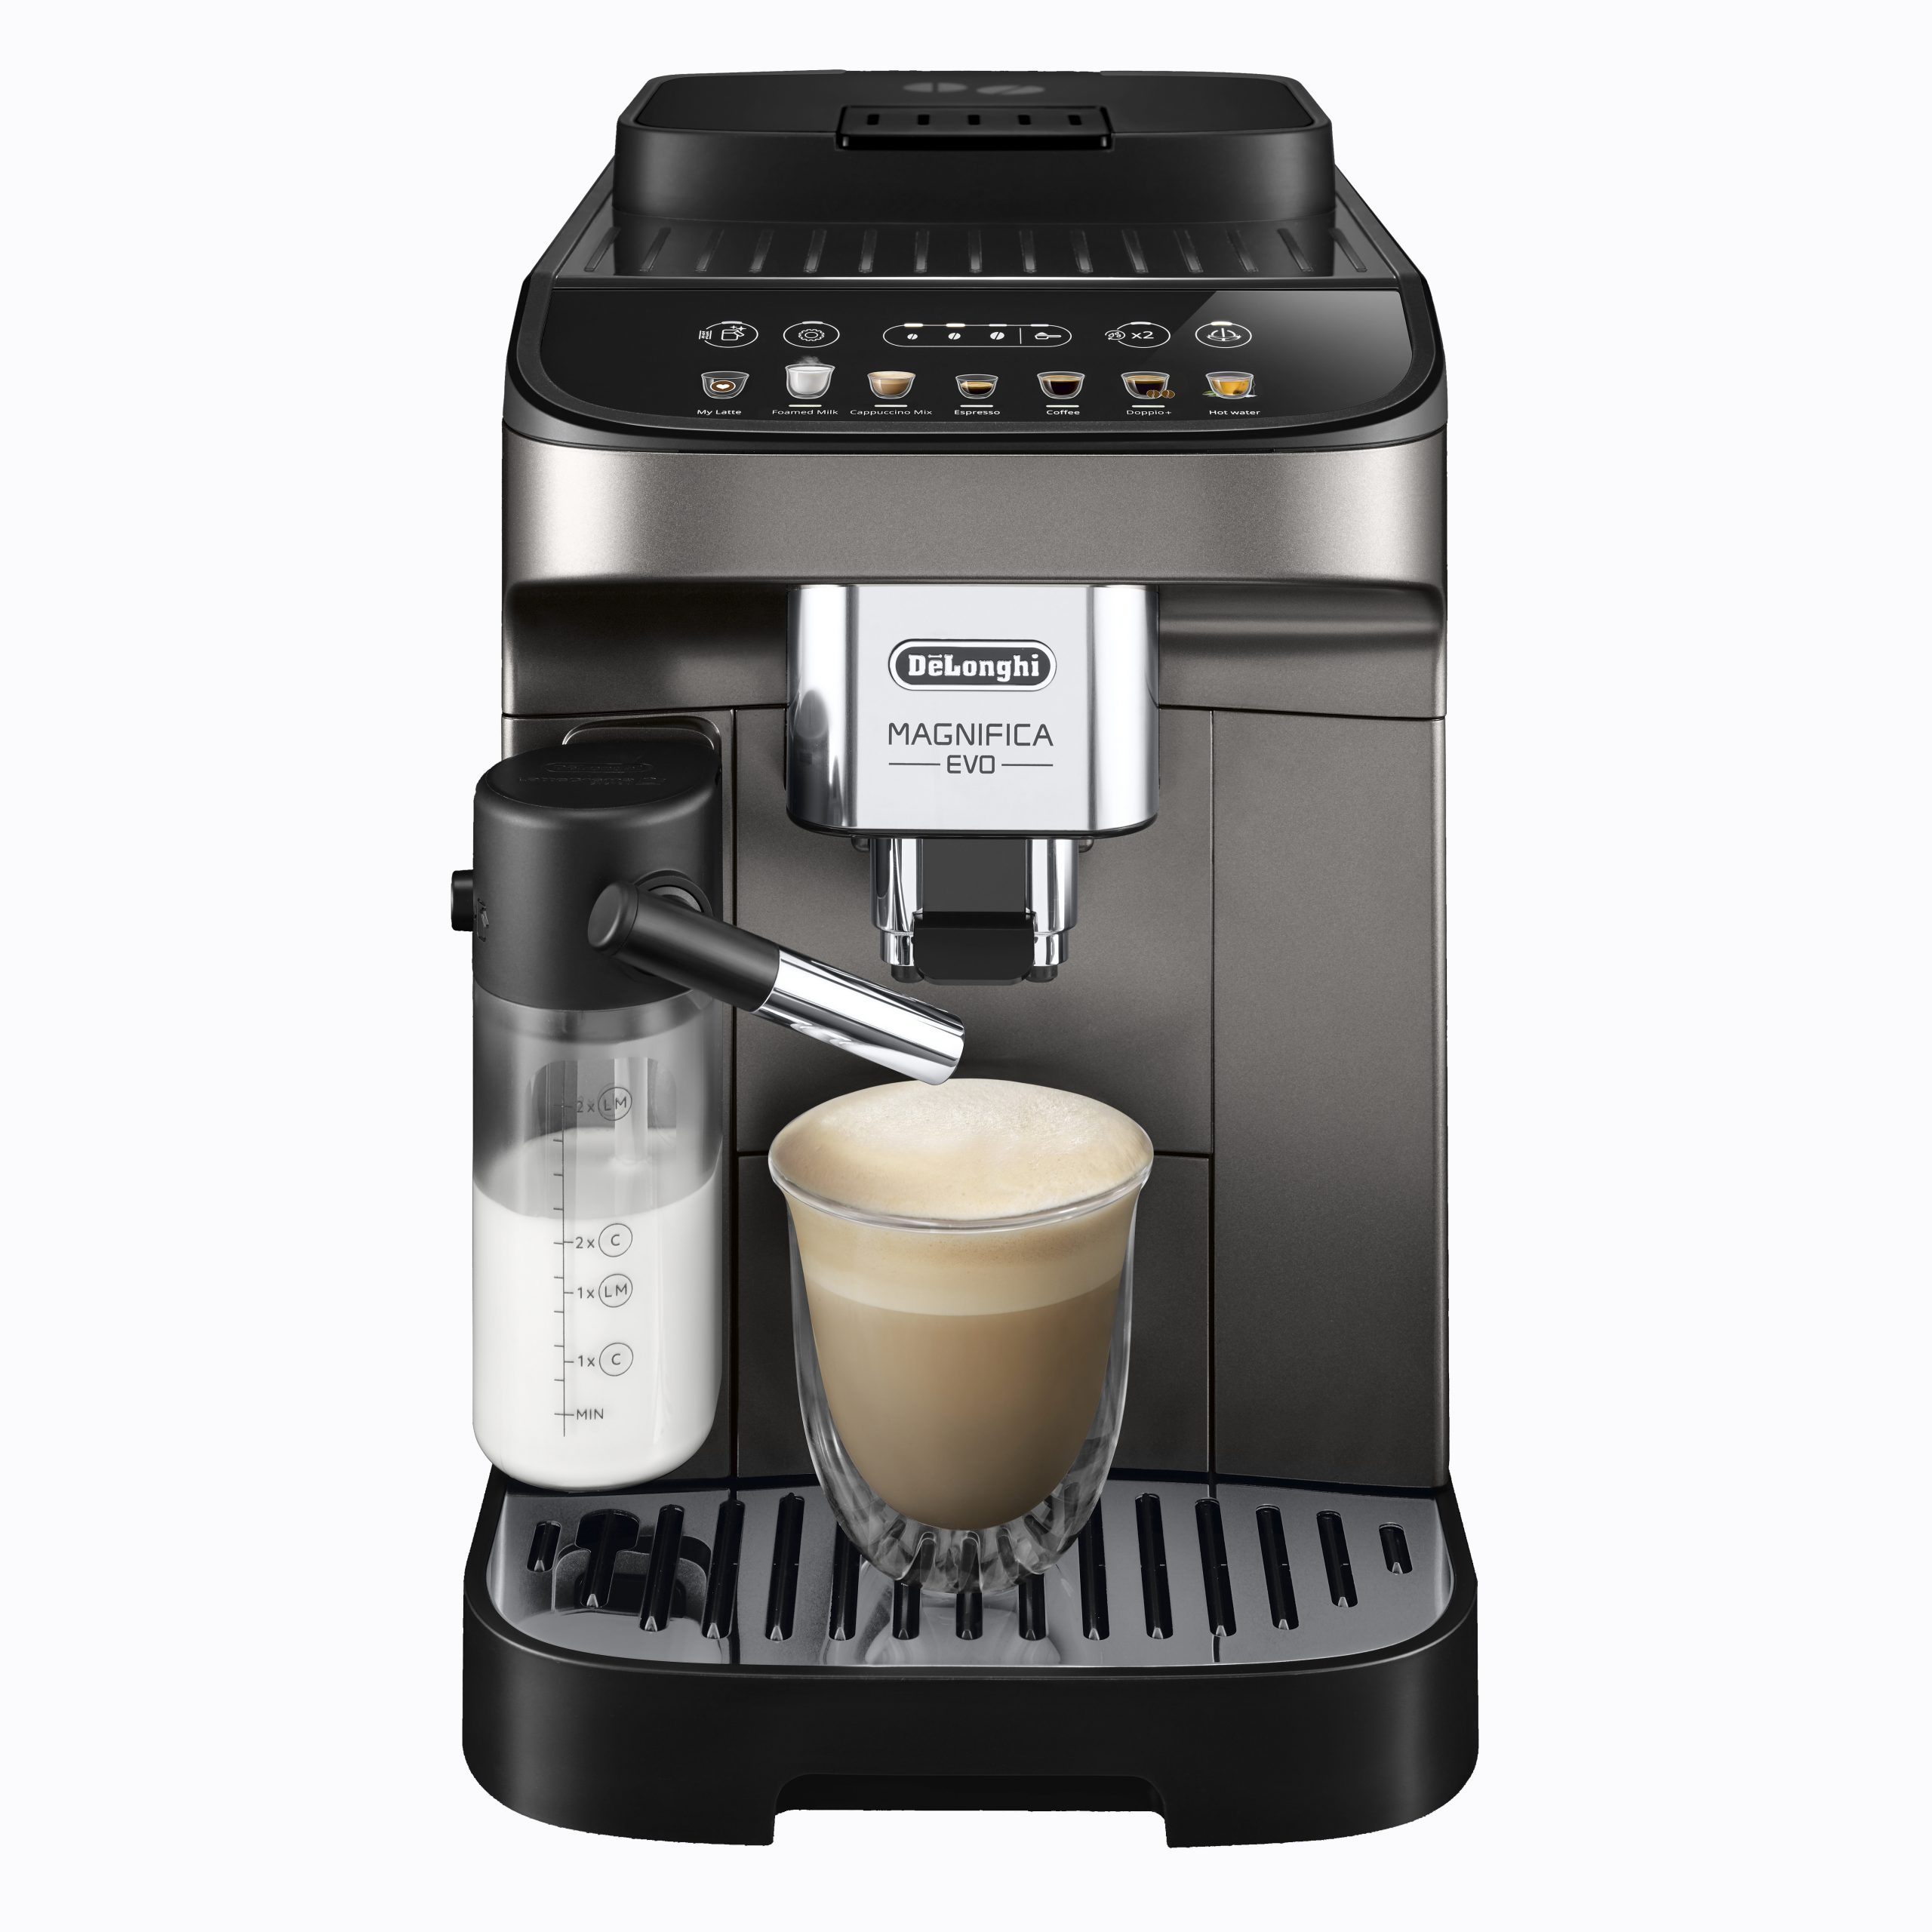 How do you choose a De'Longhi fully automatic coffee machine